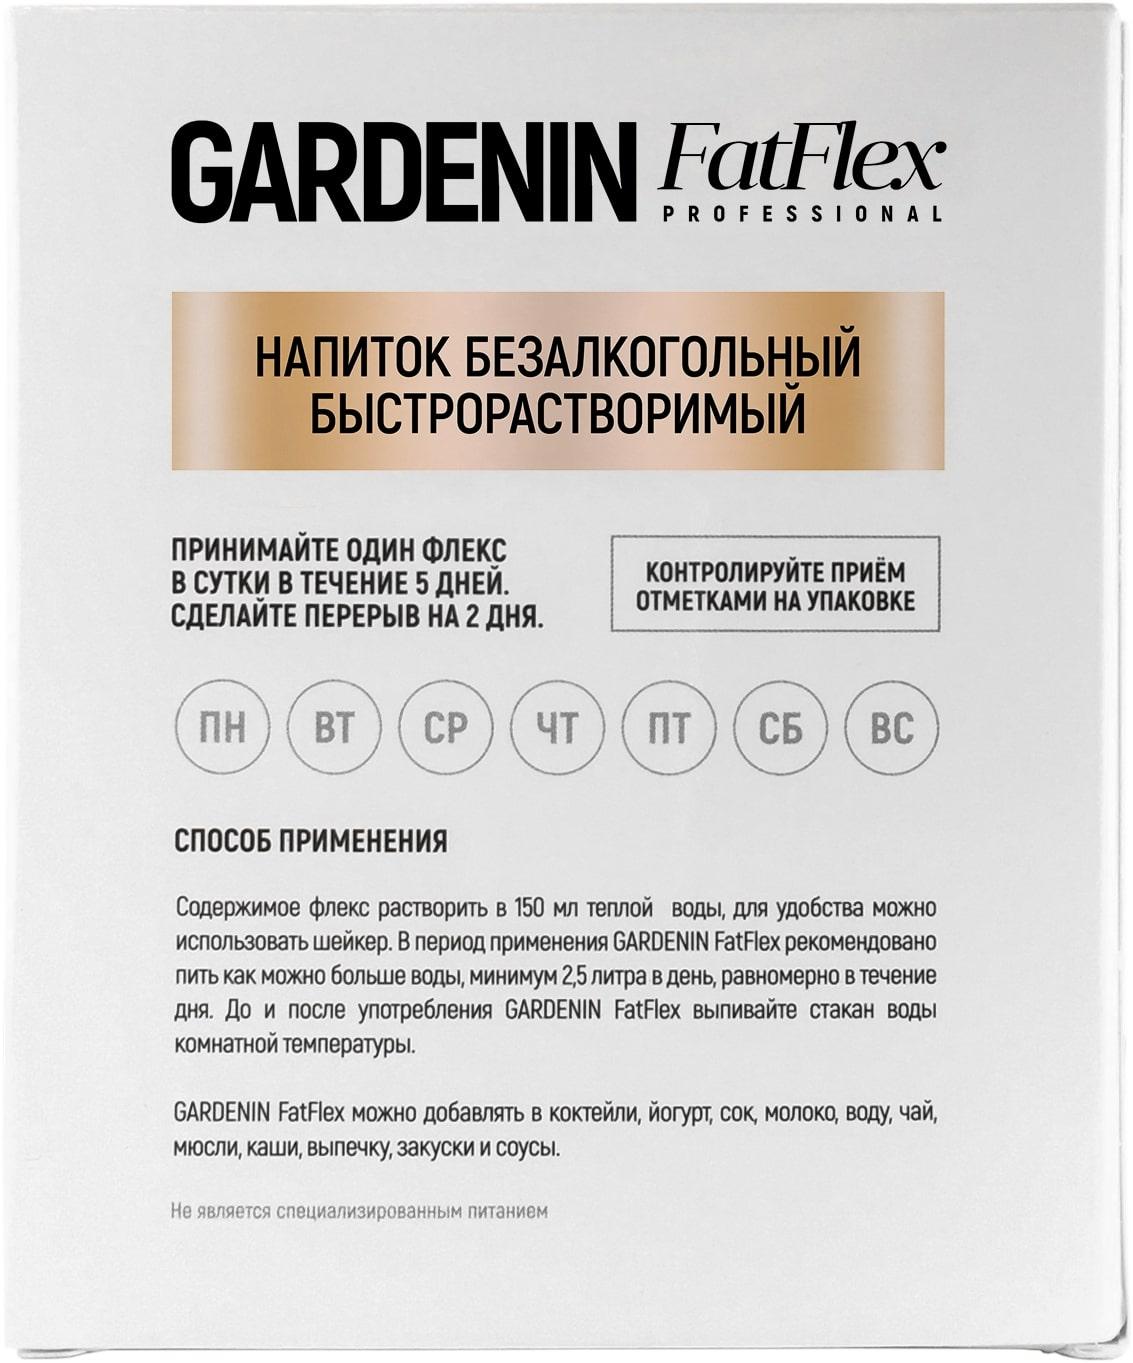 gardenin fatflex в аптеке 